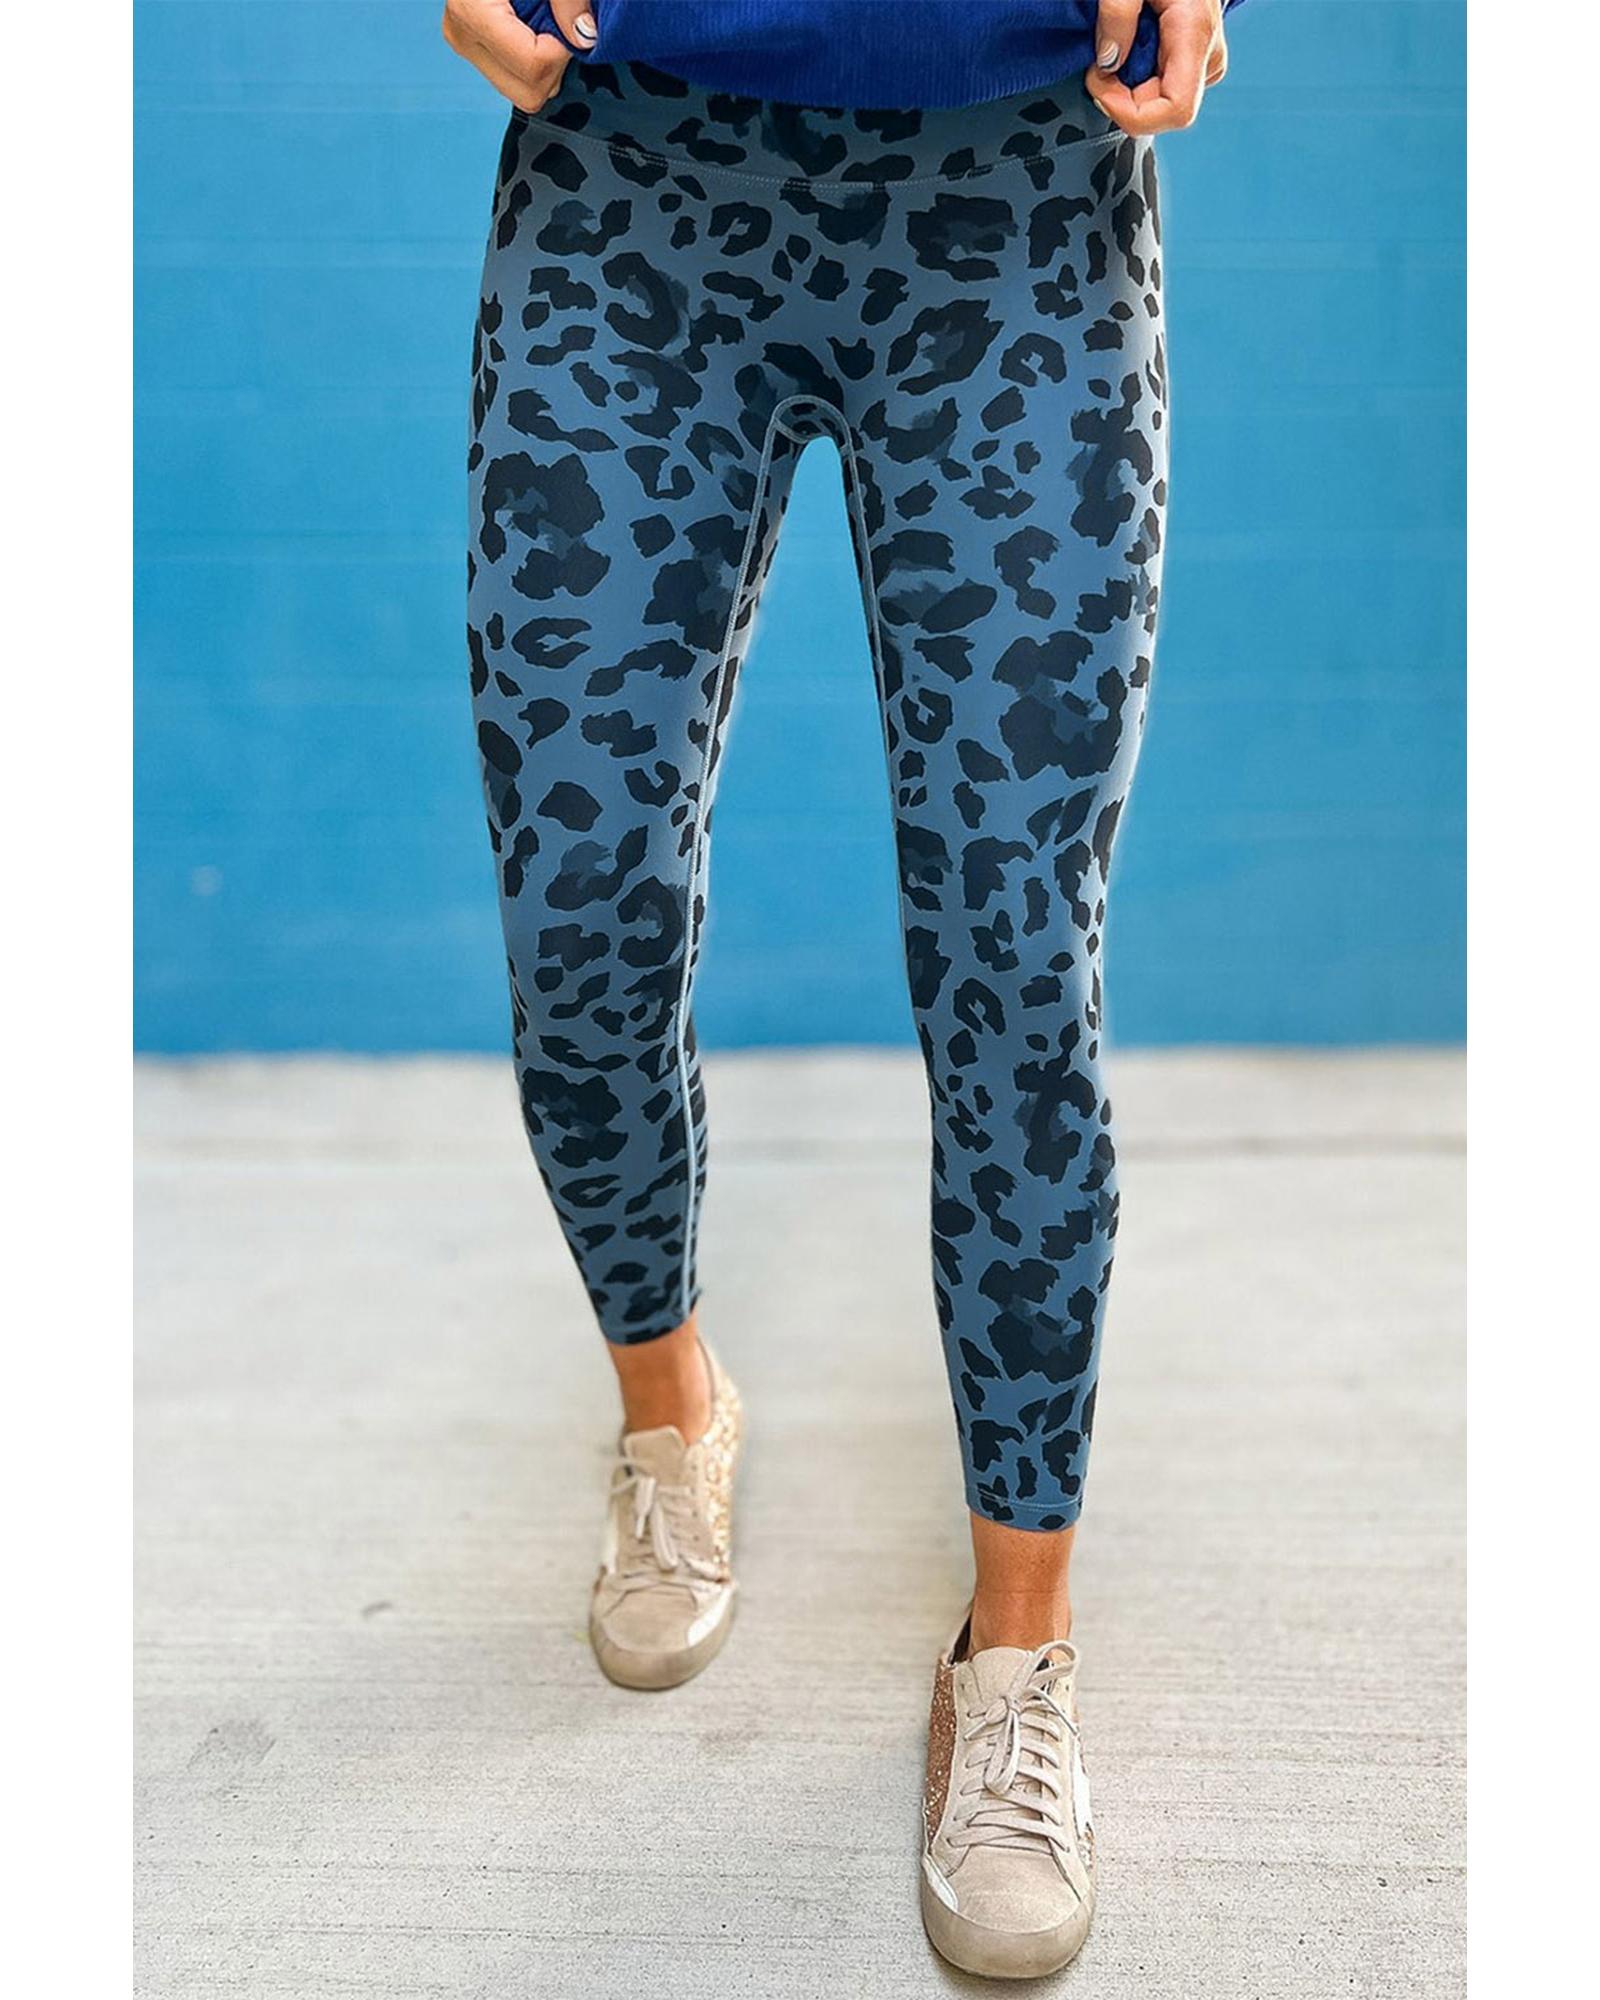 Leopard Print Active Leggings - S